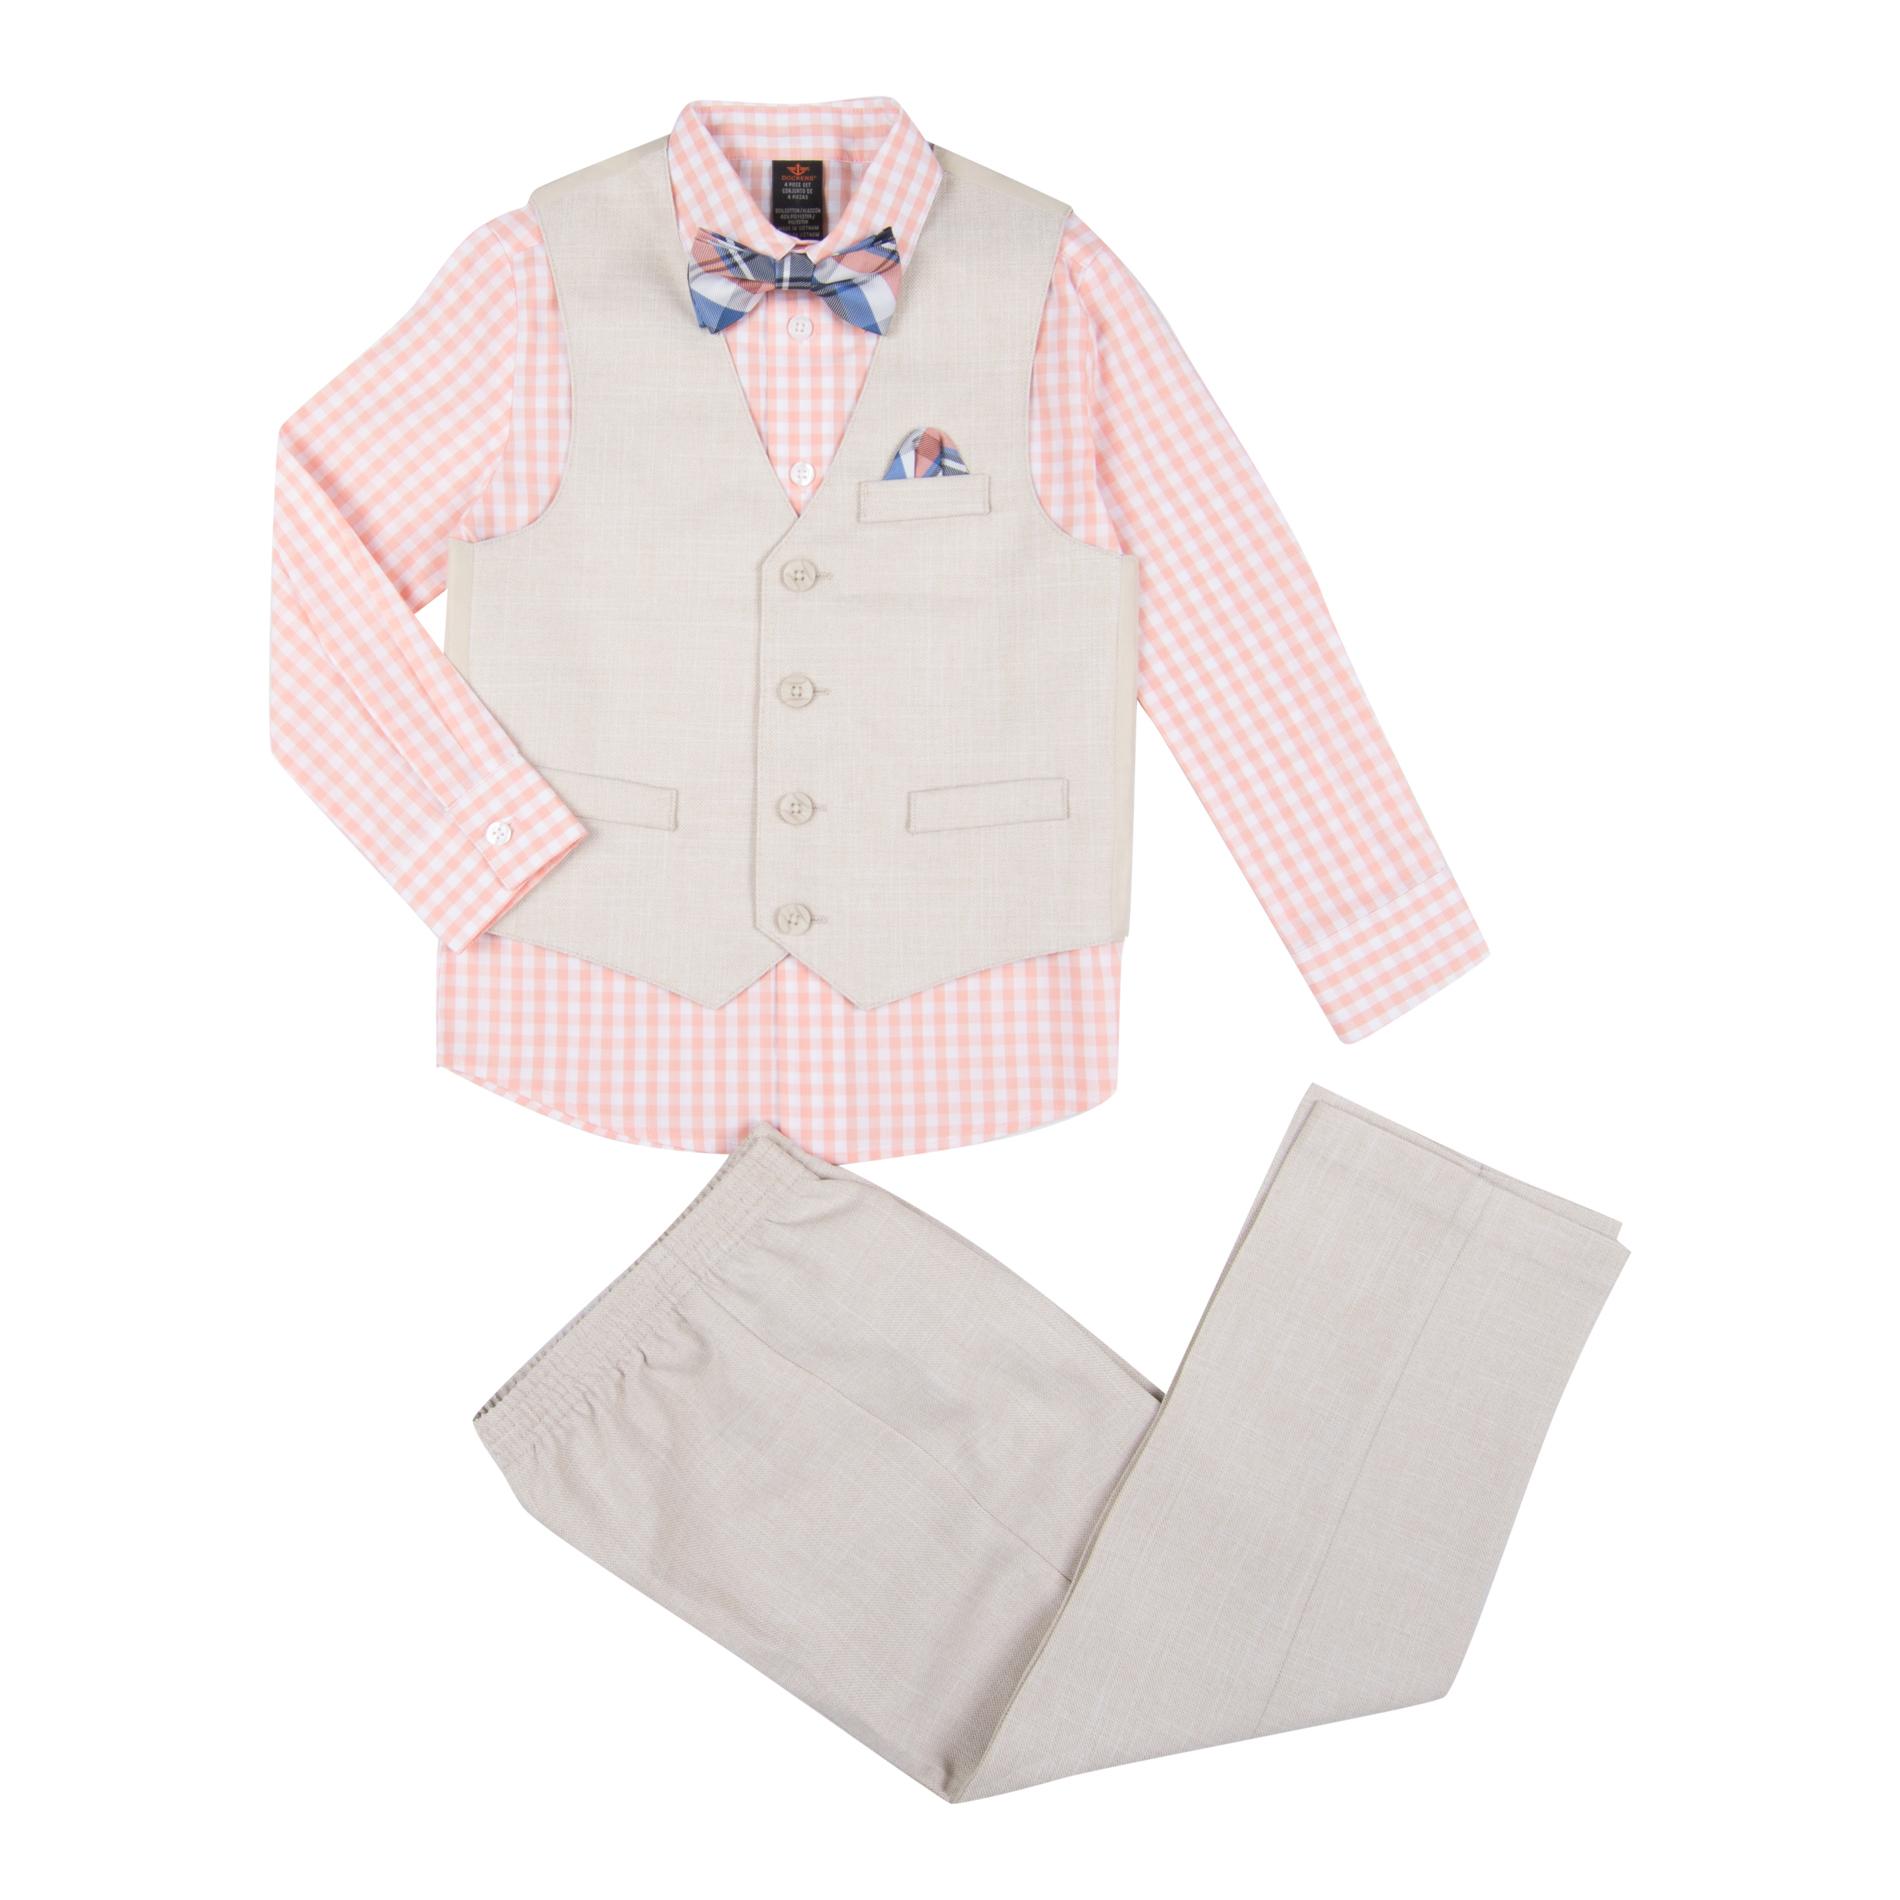 Dockers Newborn, Infant & Toddler Boys' Bow Tie, Vest, Dress Shirt & Pants